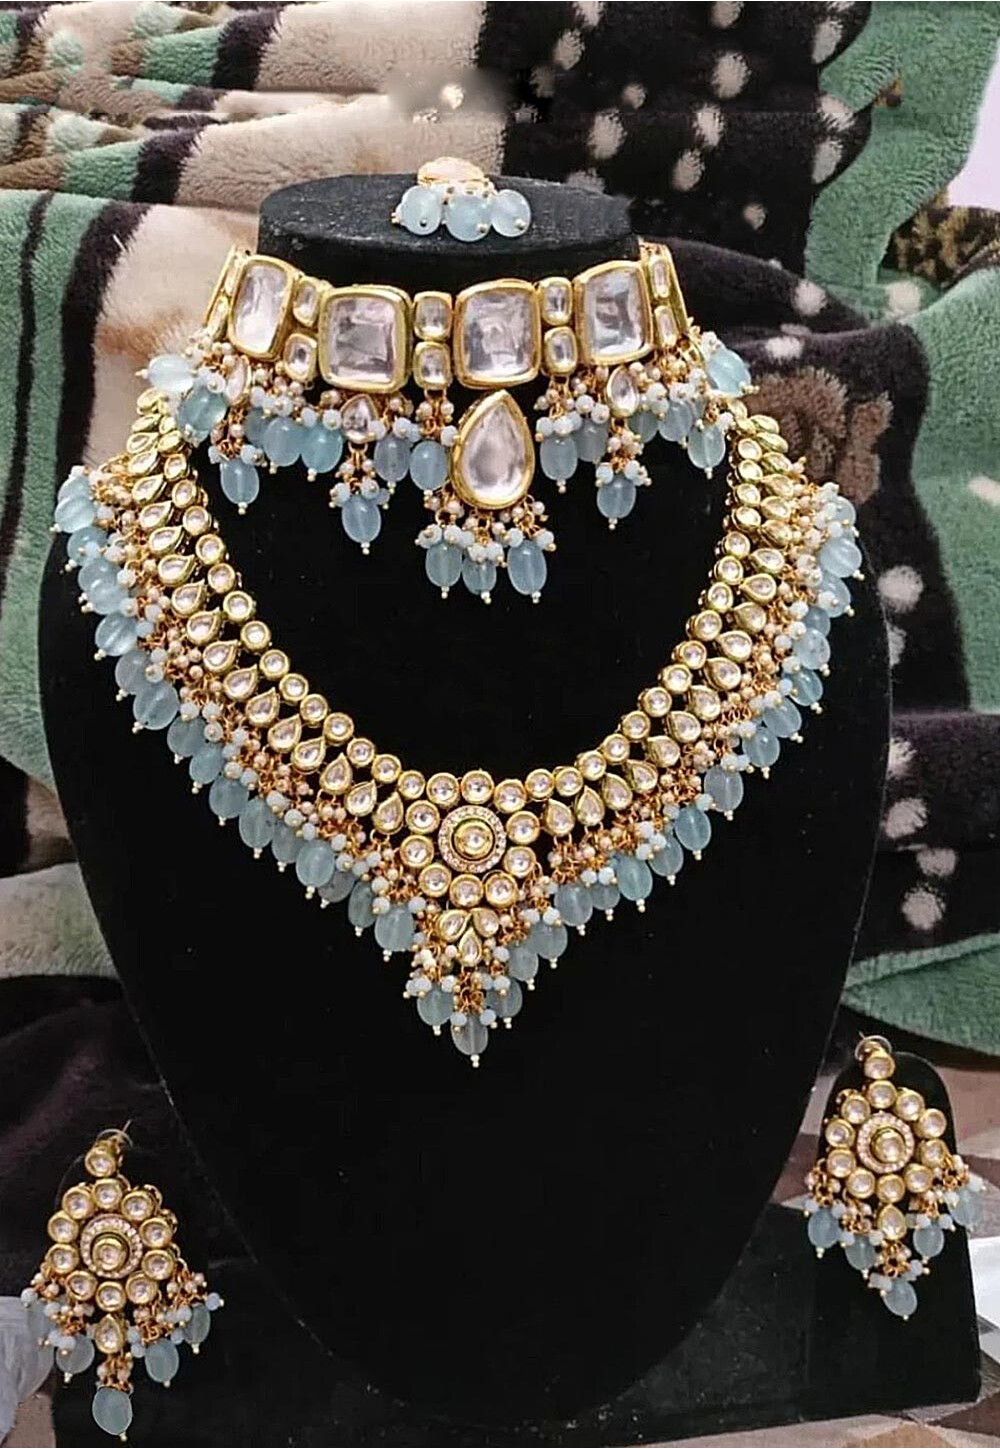 Display more than 146 choker necklace for lehenga